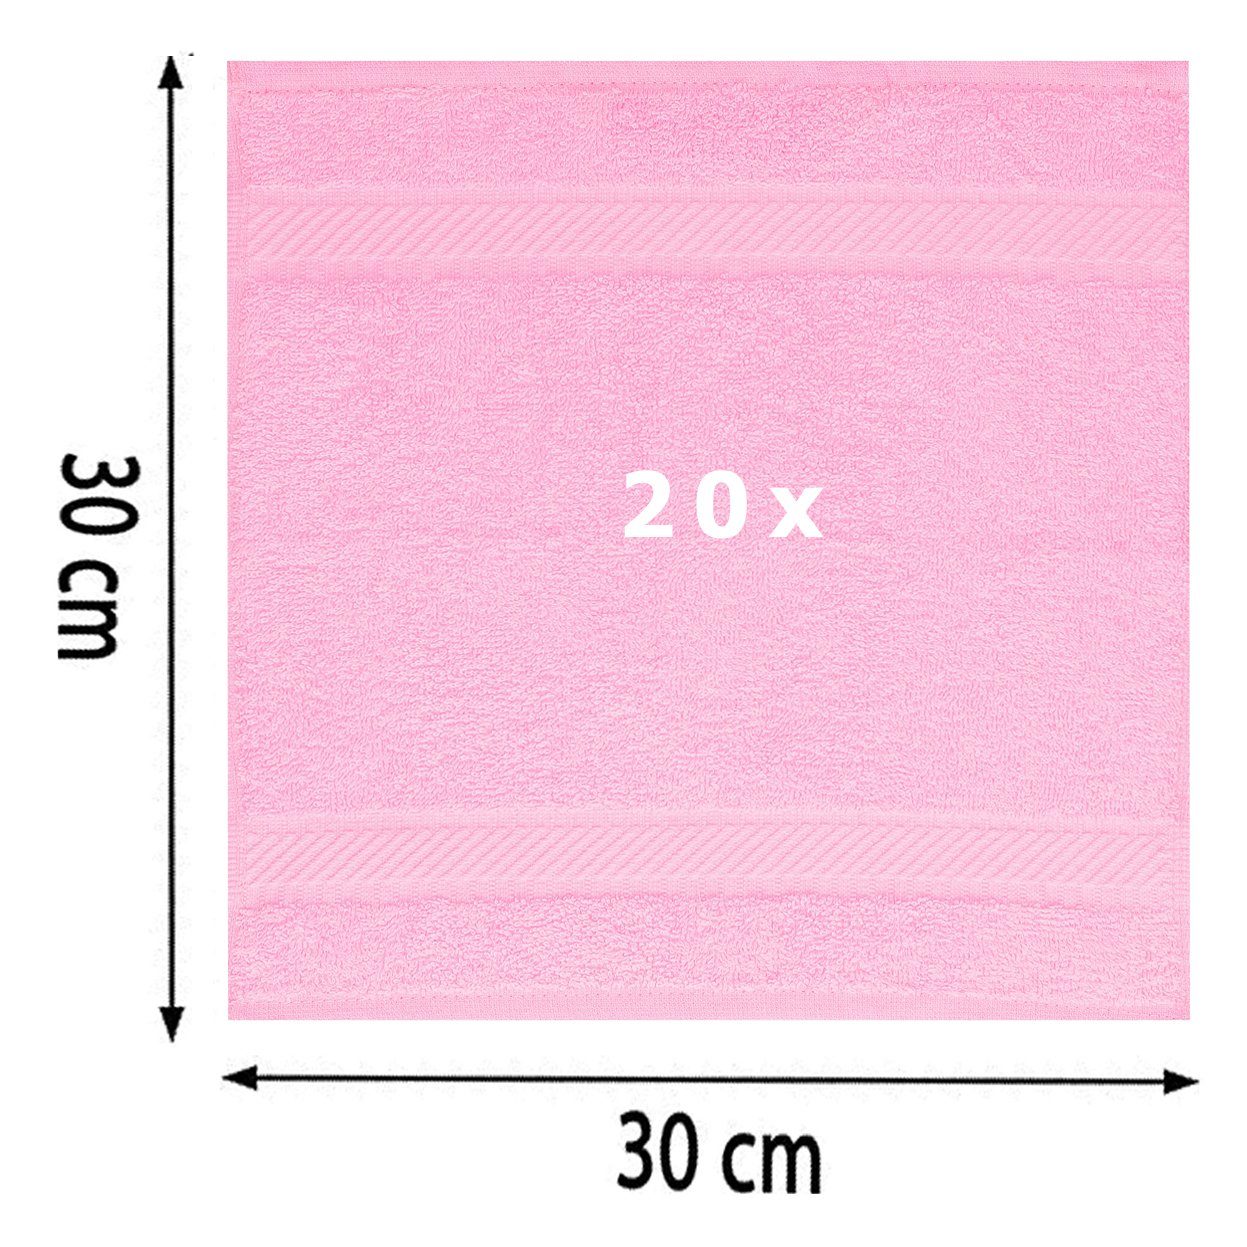 Betz Seiftuch 30x30 Seiftücher Stück cm 20 Palermo rosé Farbe Größe